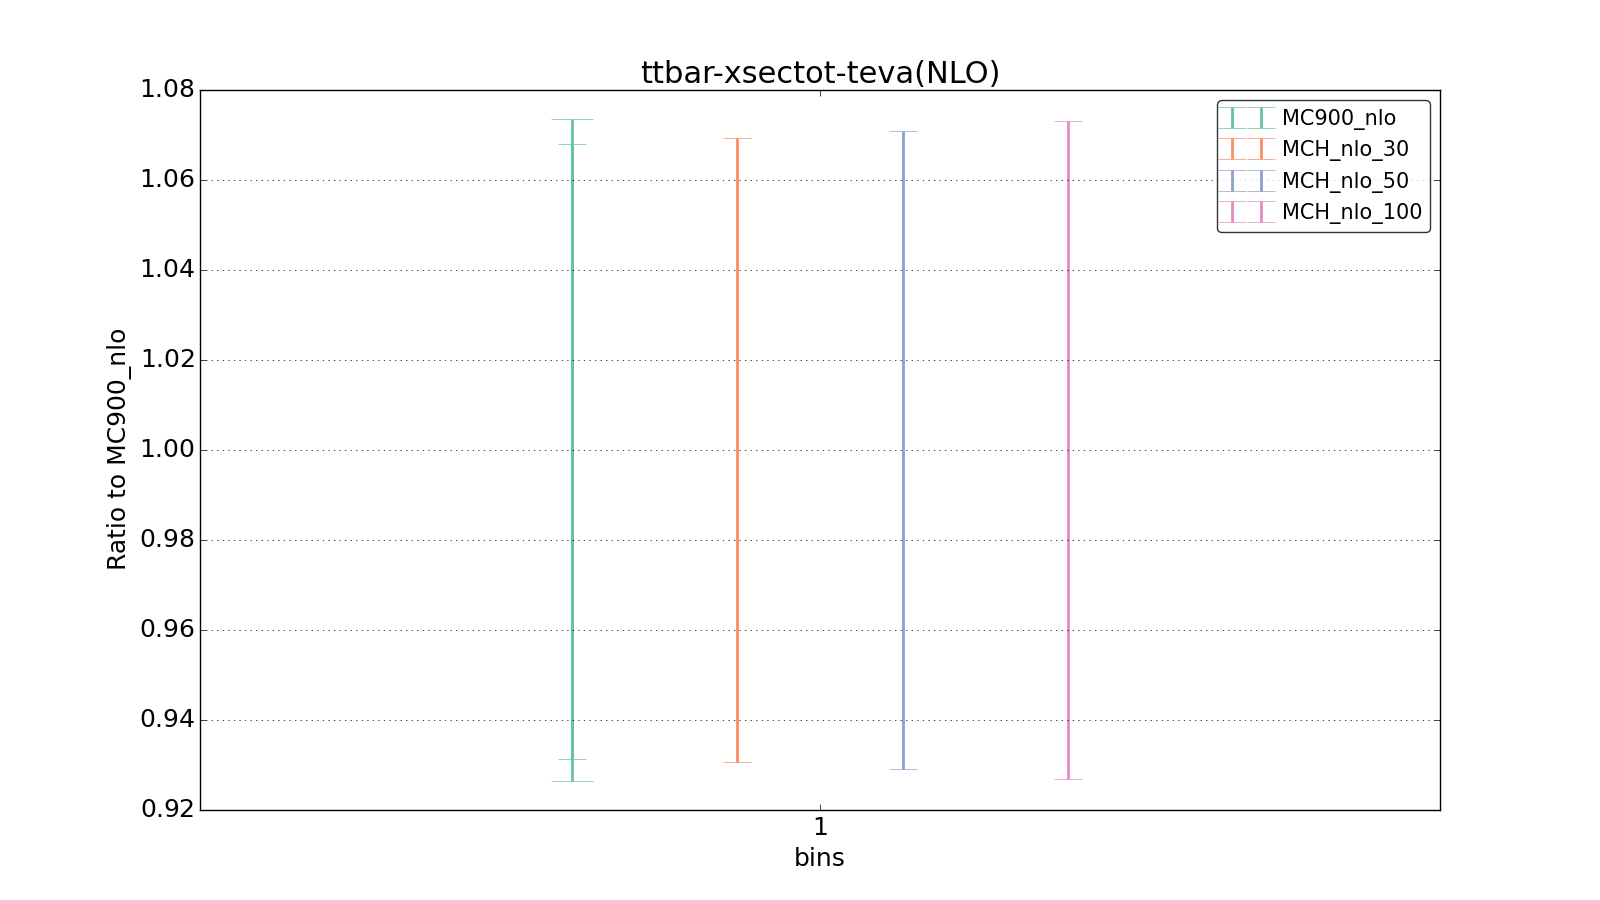 figure plots/pheno_new/NLO/ciplot_ttbar-xsectot-teva(NLO).png